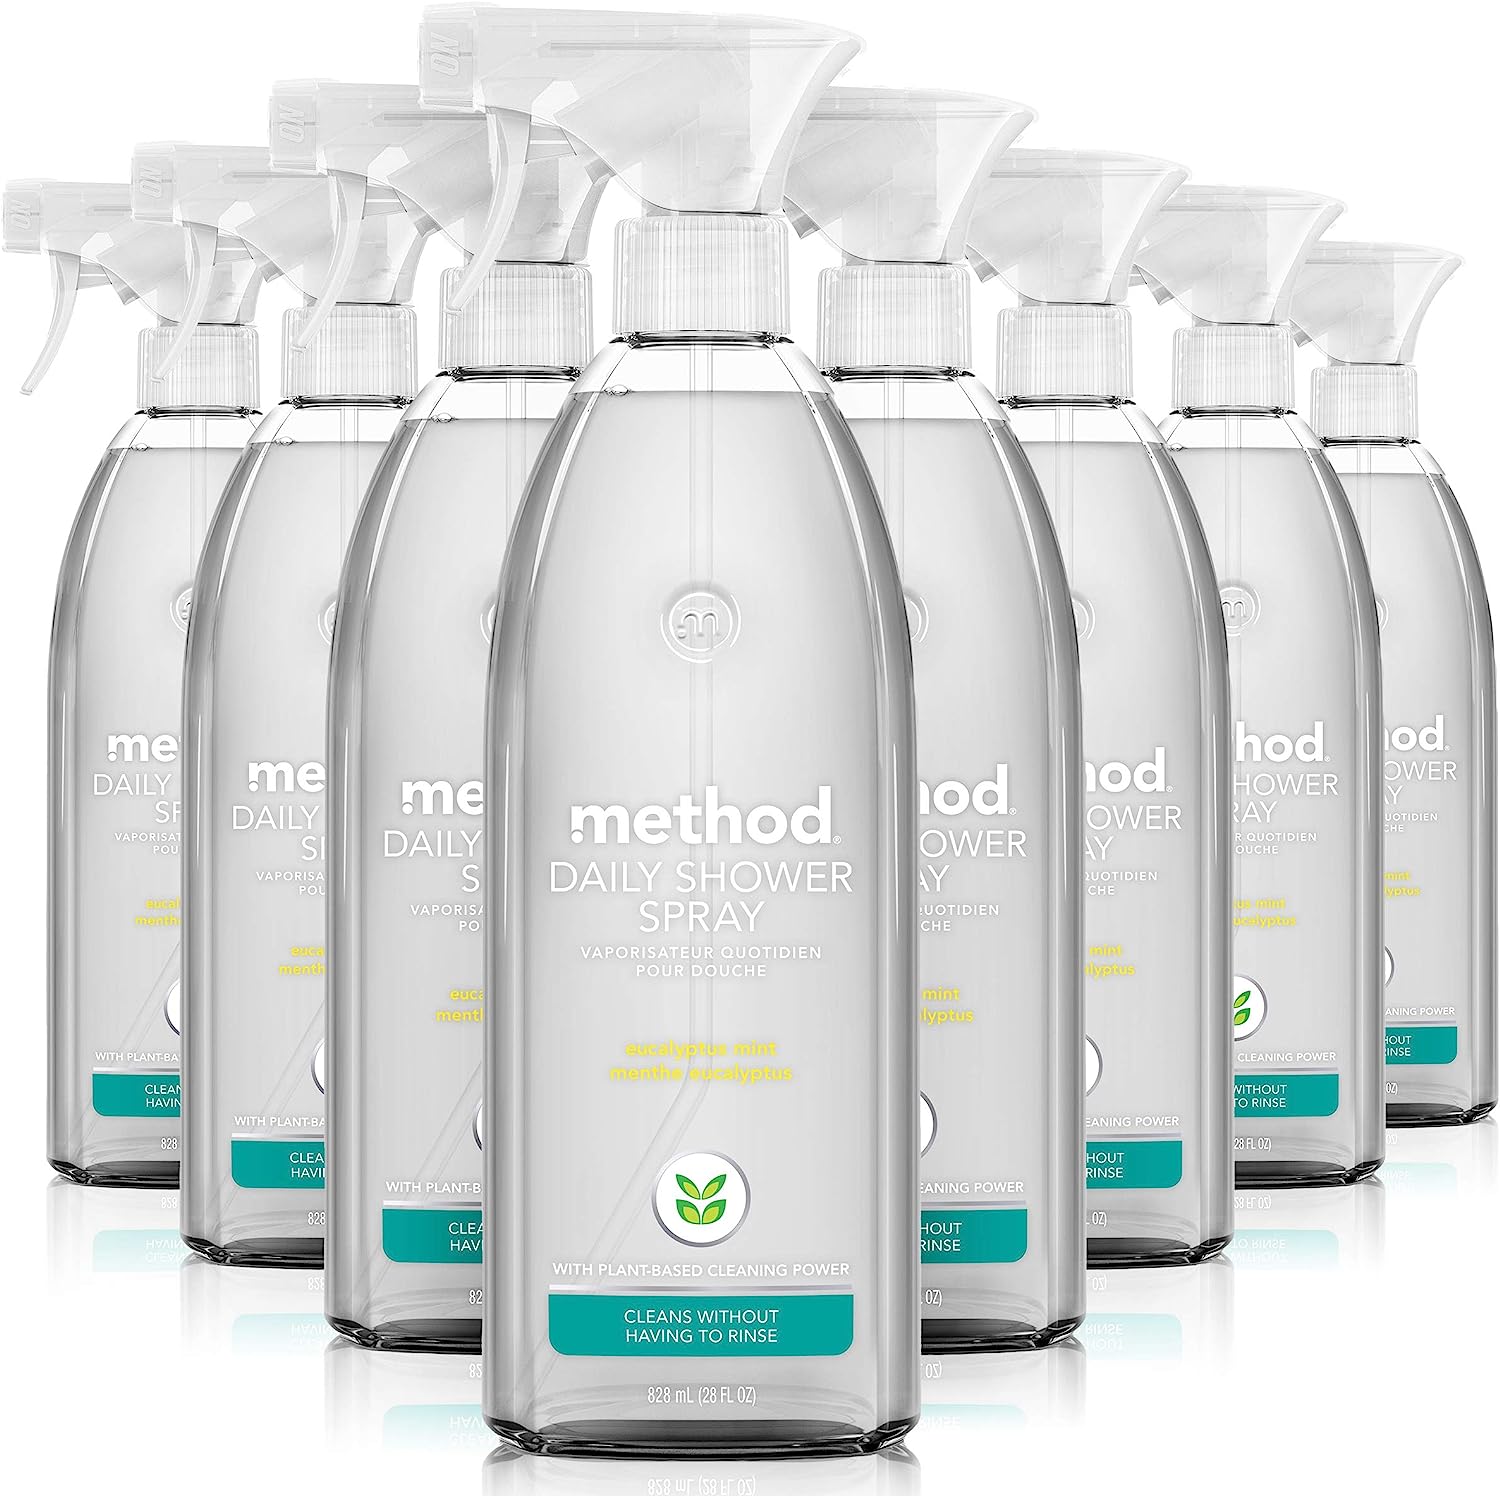 Method Daily Shower Cleaner Spray; Plant-Based & [...]